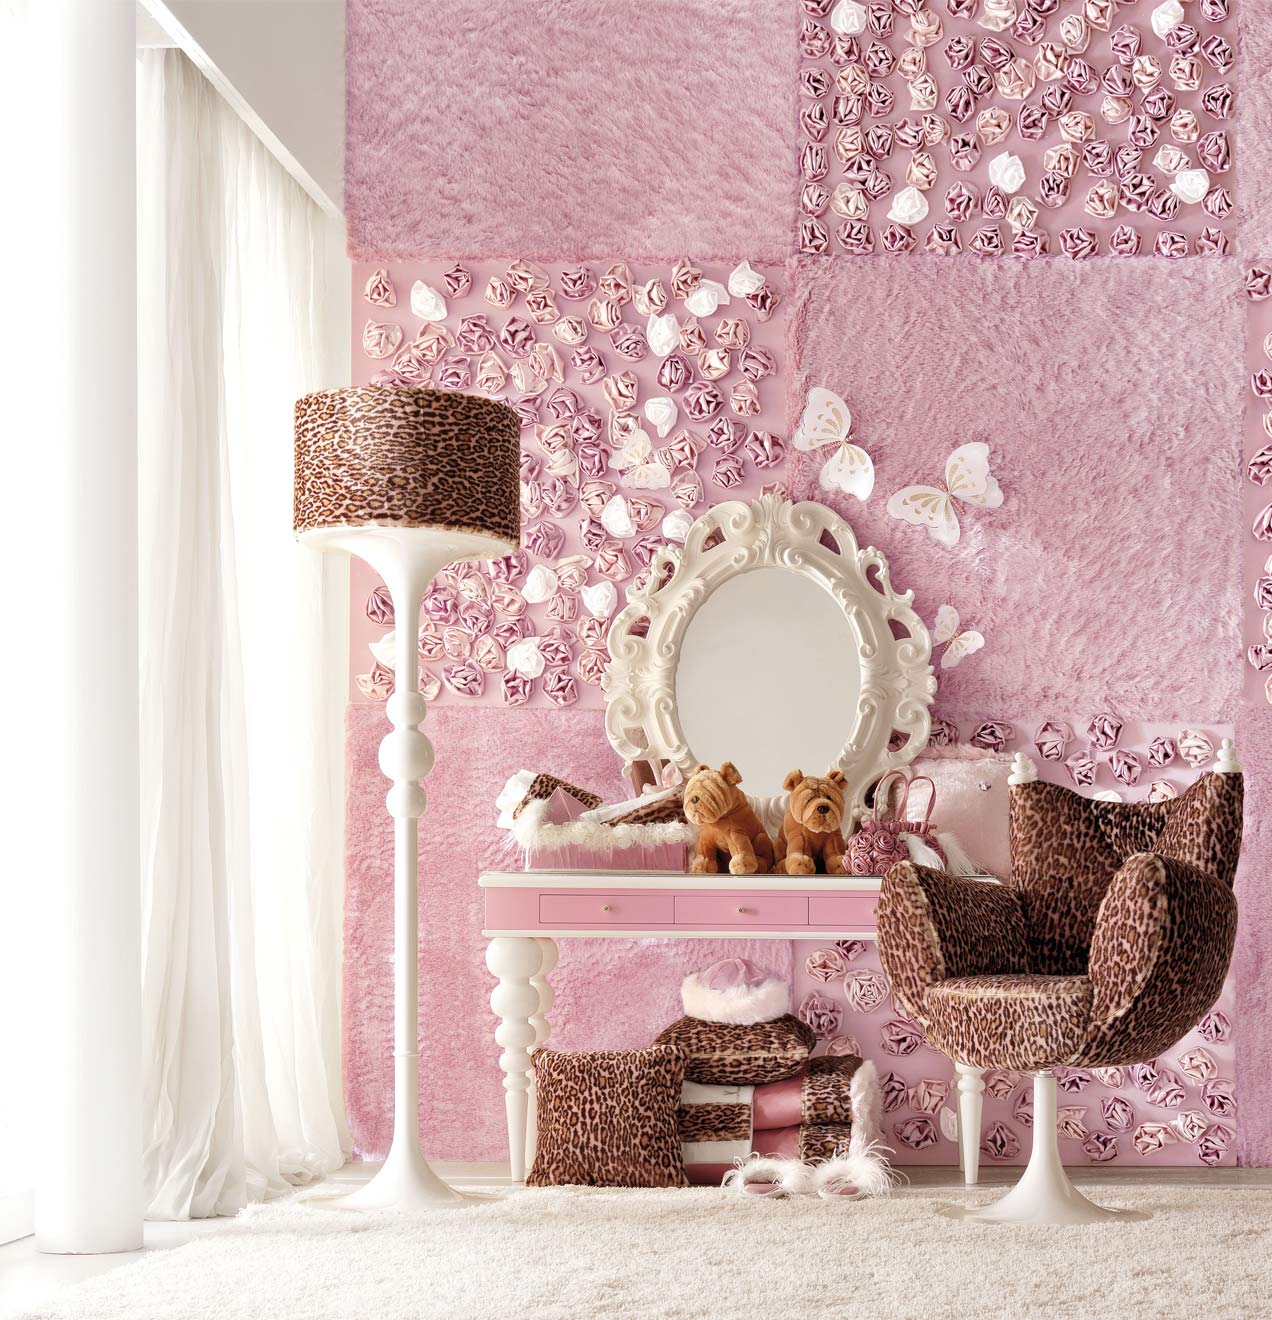 35 dreamy bedroom designs for your little princess homesthetics 18.jpg